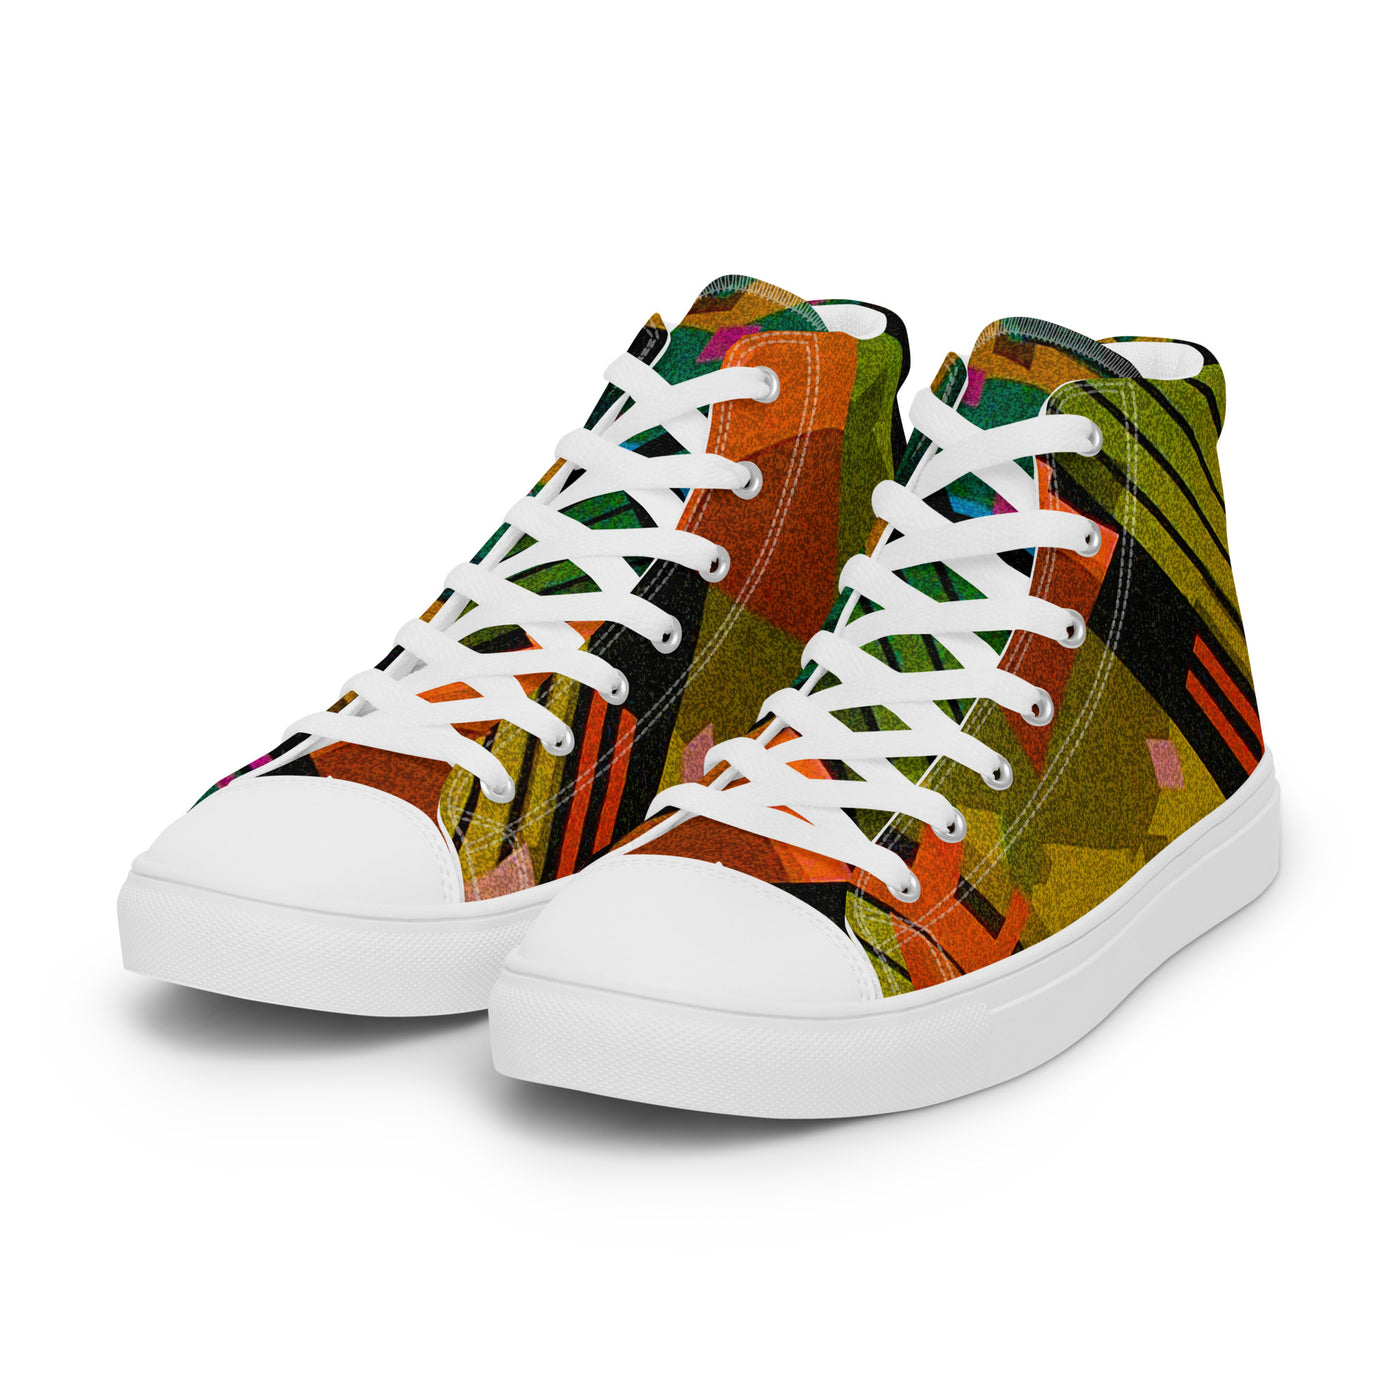 TechAbstract 1 color - Men's High Top Canvas Shoes